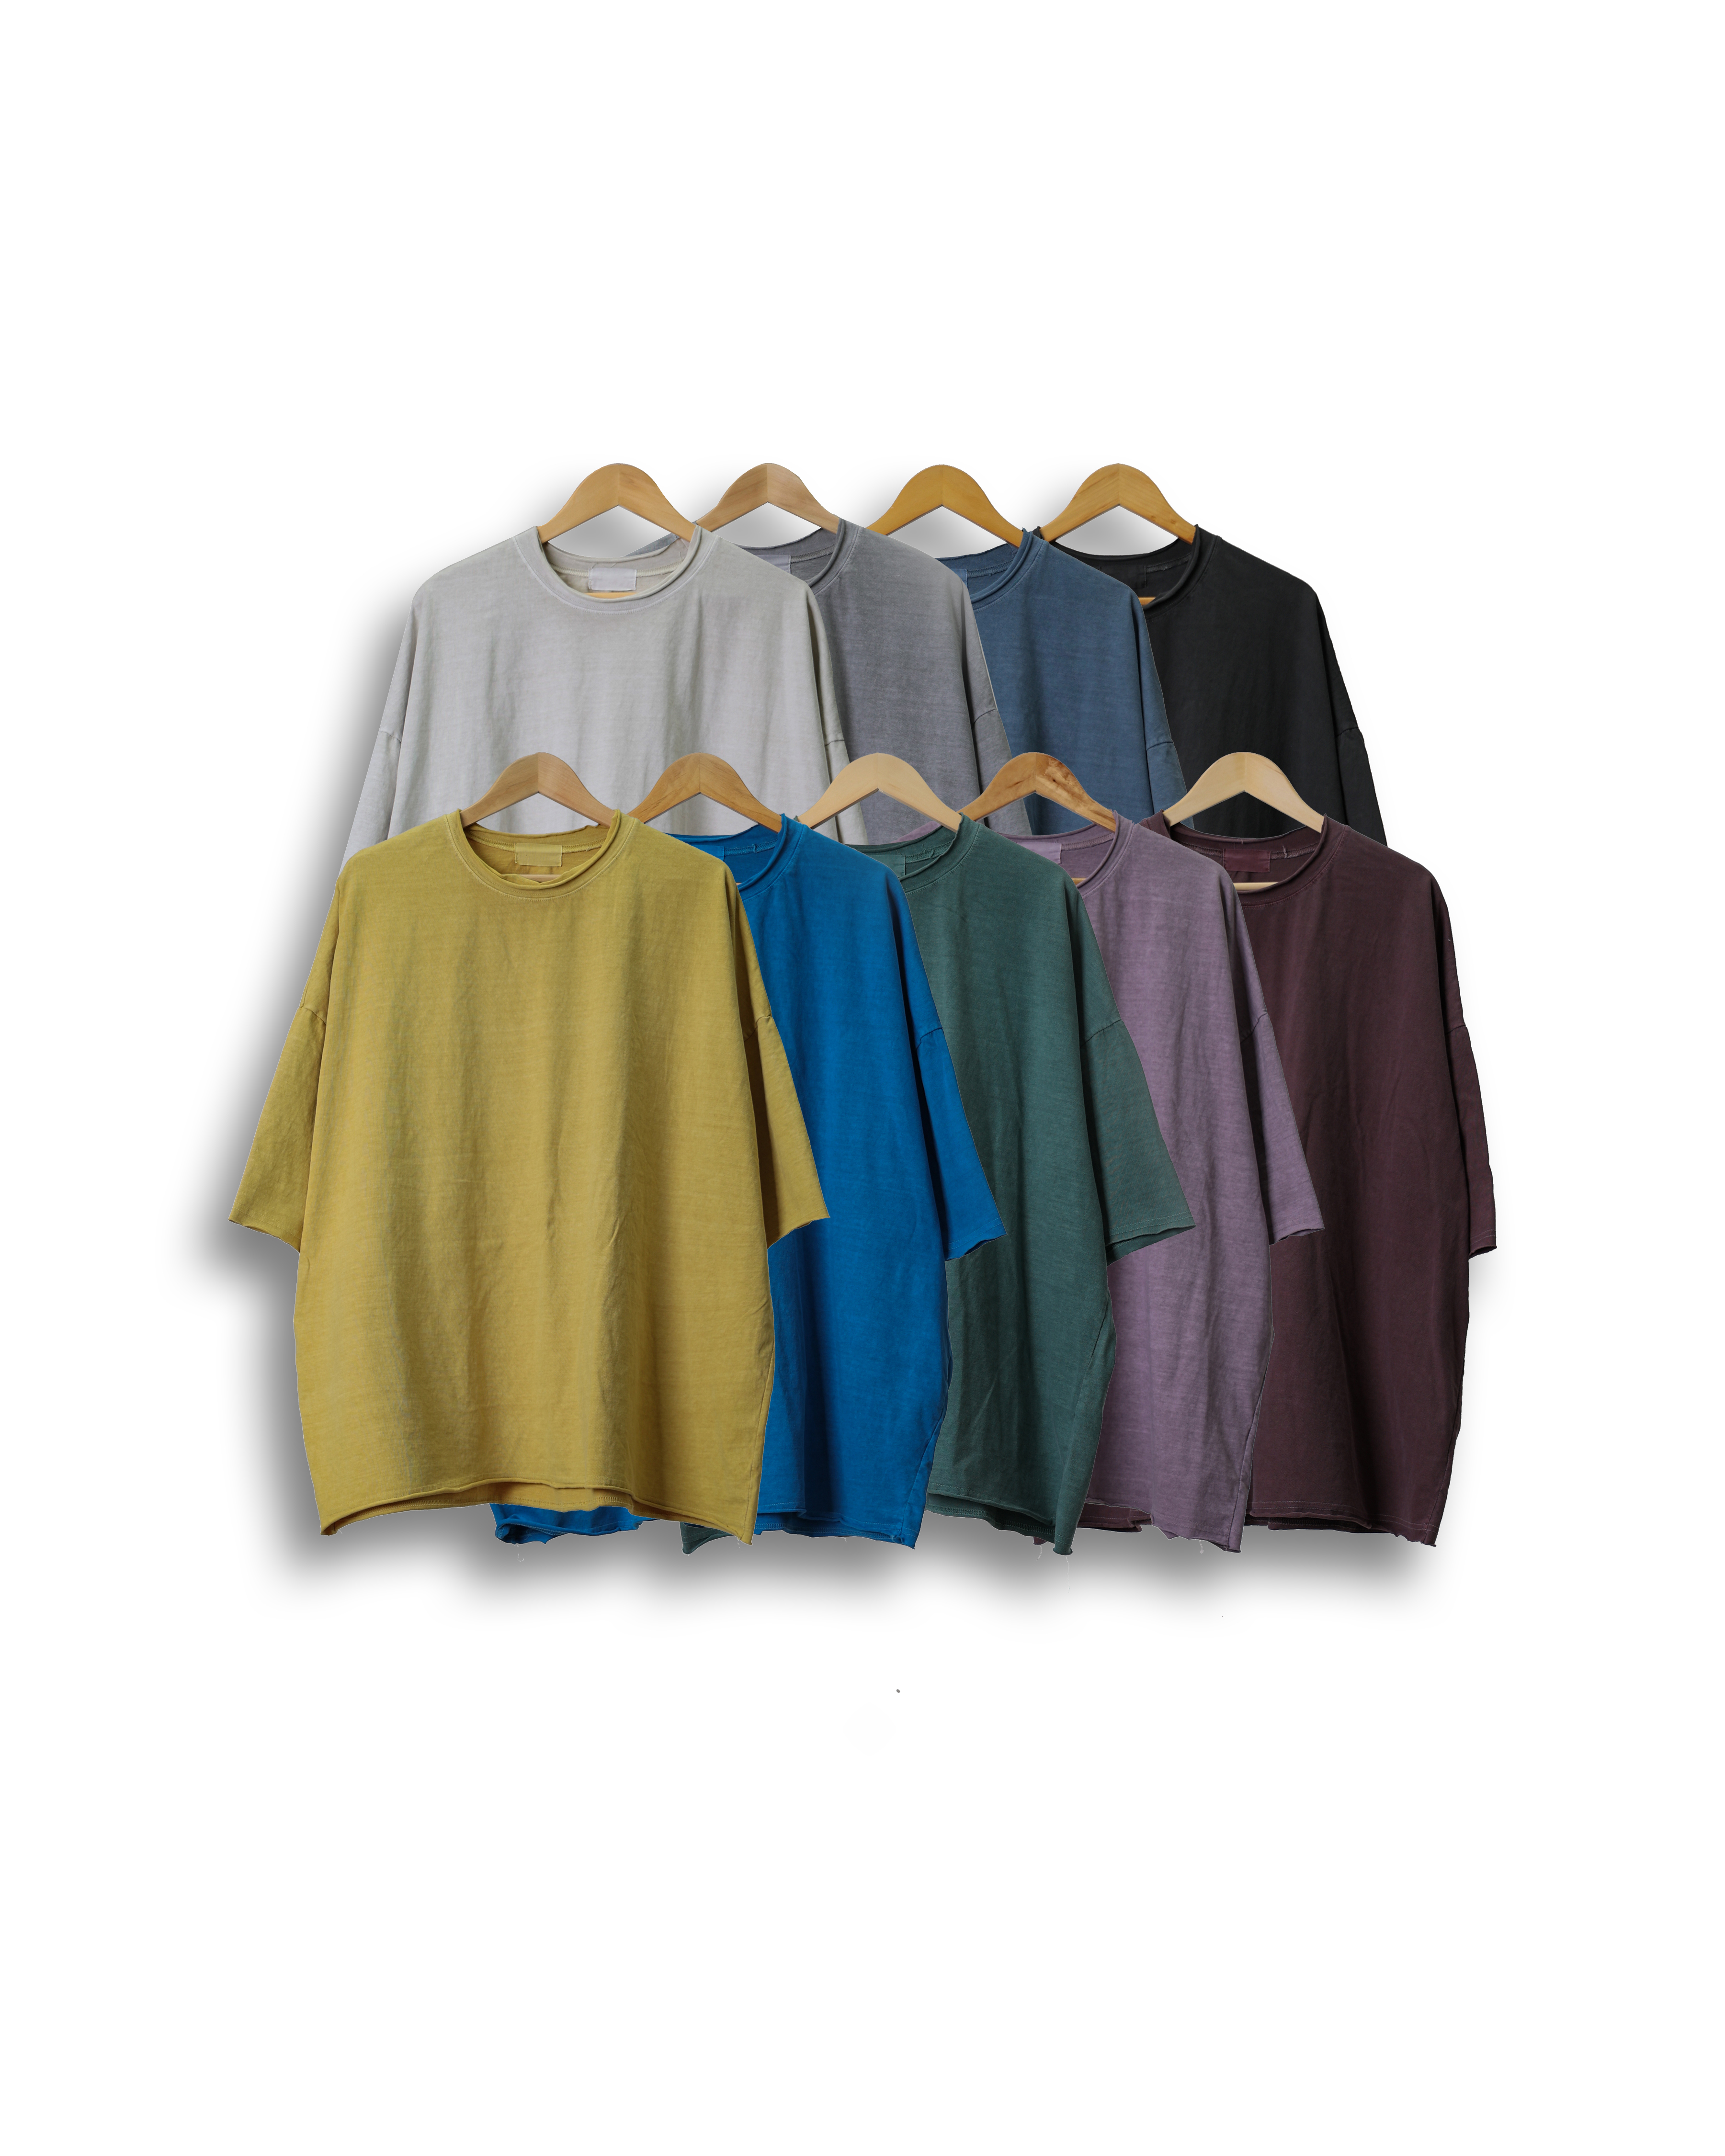 NOOR Dying Cutting Detail Over T Shirts (Charcoal/Khaki/Burgundy/Light Gray/Sky Blue/Mustard/Light Purple/Steel Blue/Oat Beige)